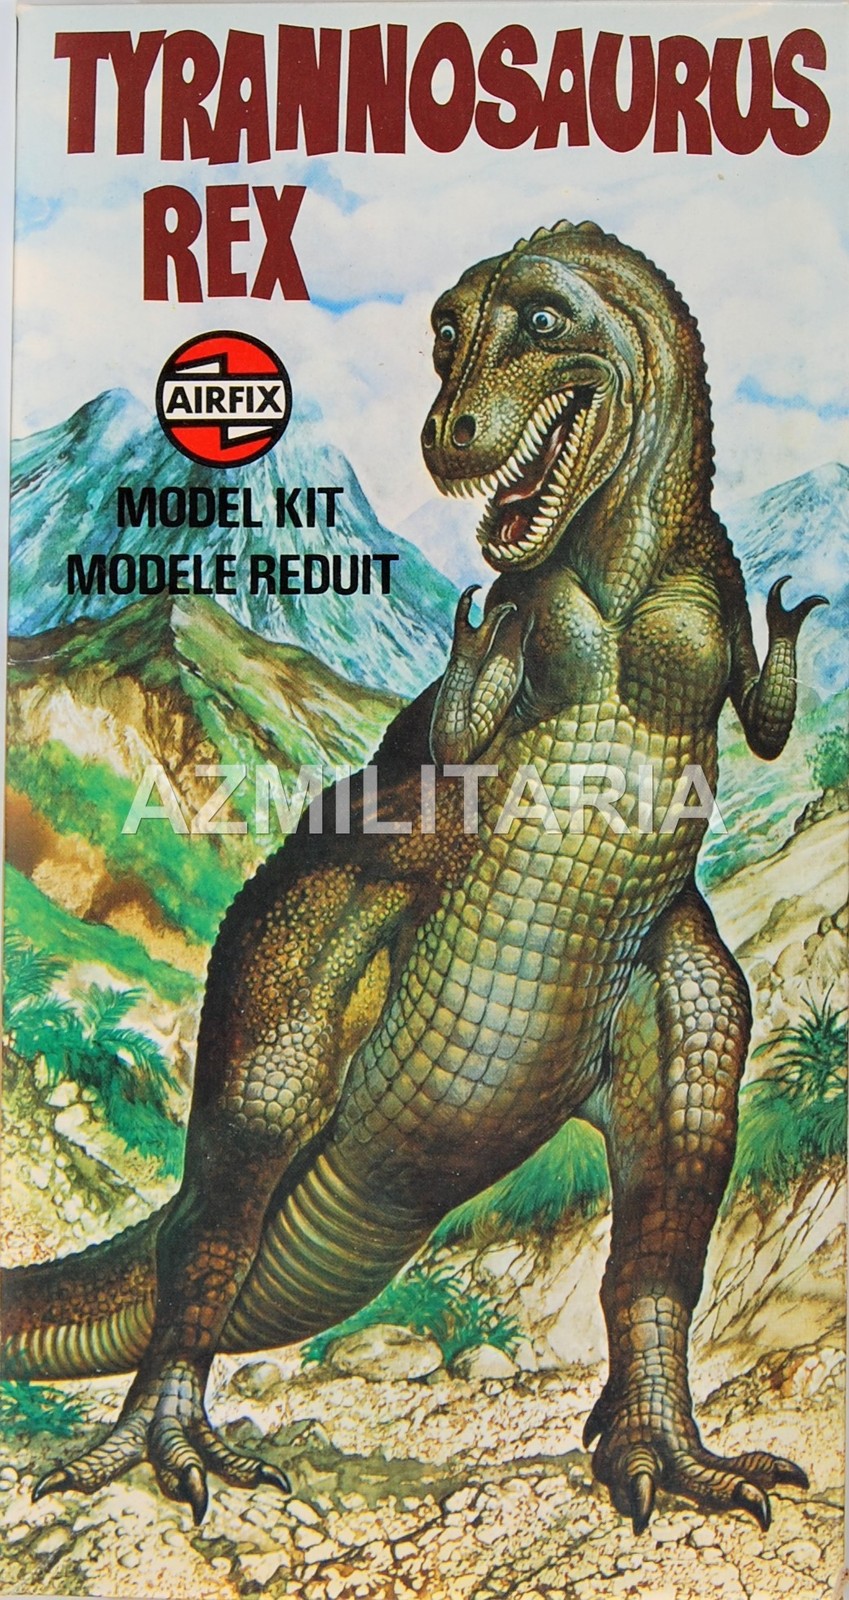 Primary image for Airfix Tyrannosaurus Rex Model Kit Series 3 03800-1 